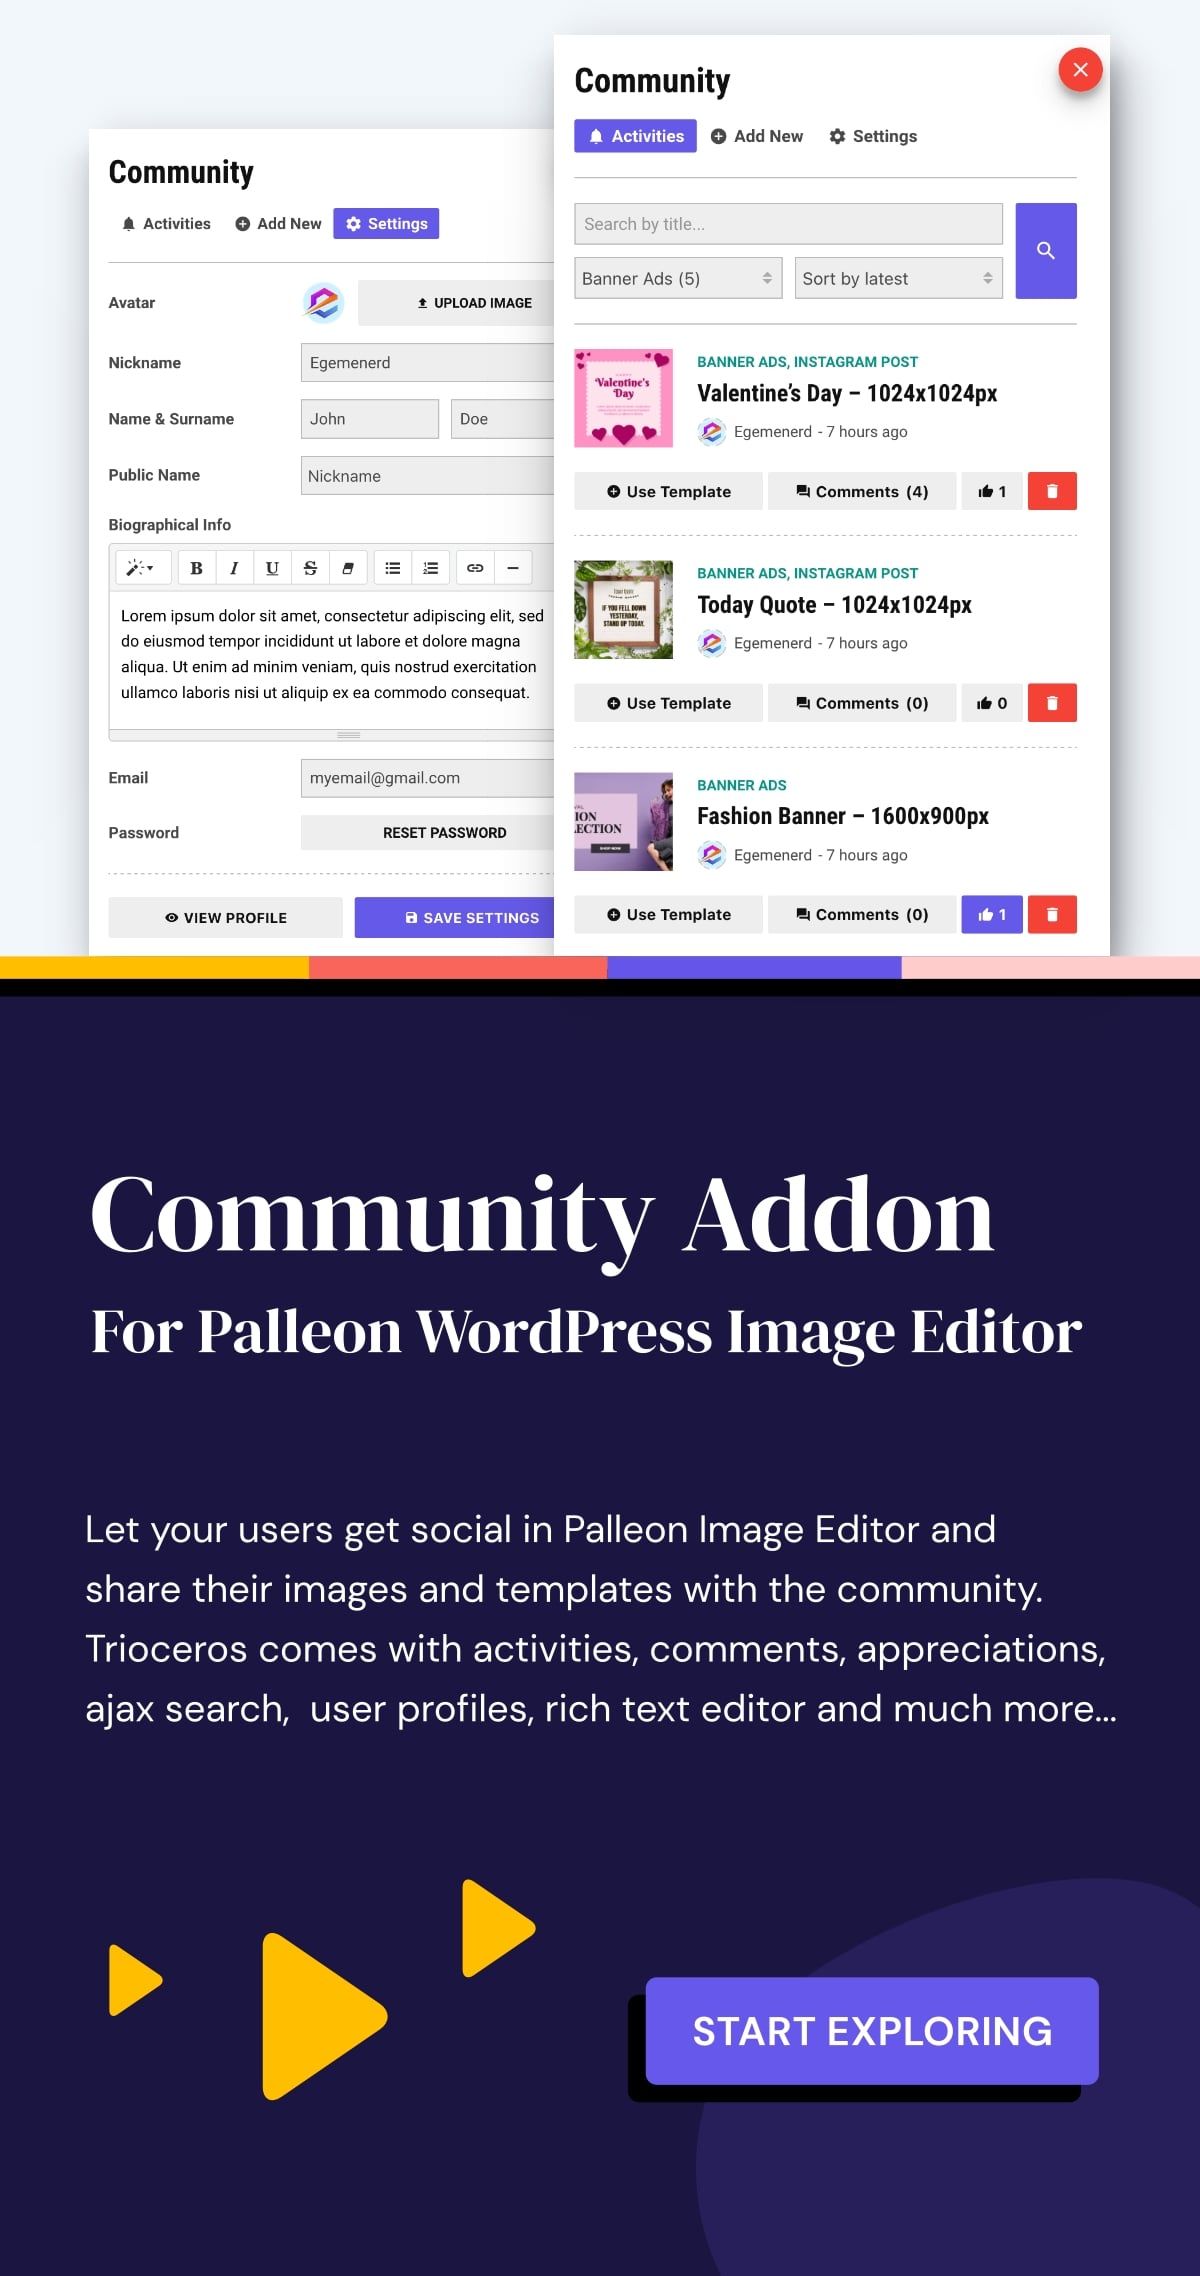 Trioceros - Community Addon For Palleon WordPress Image Editor